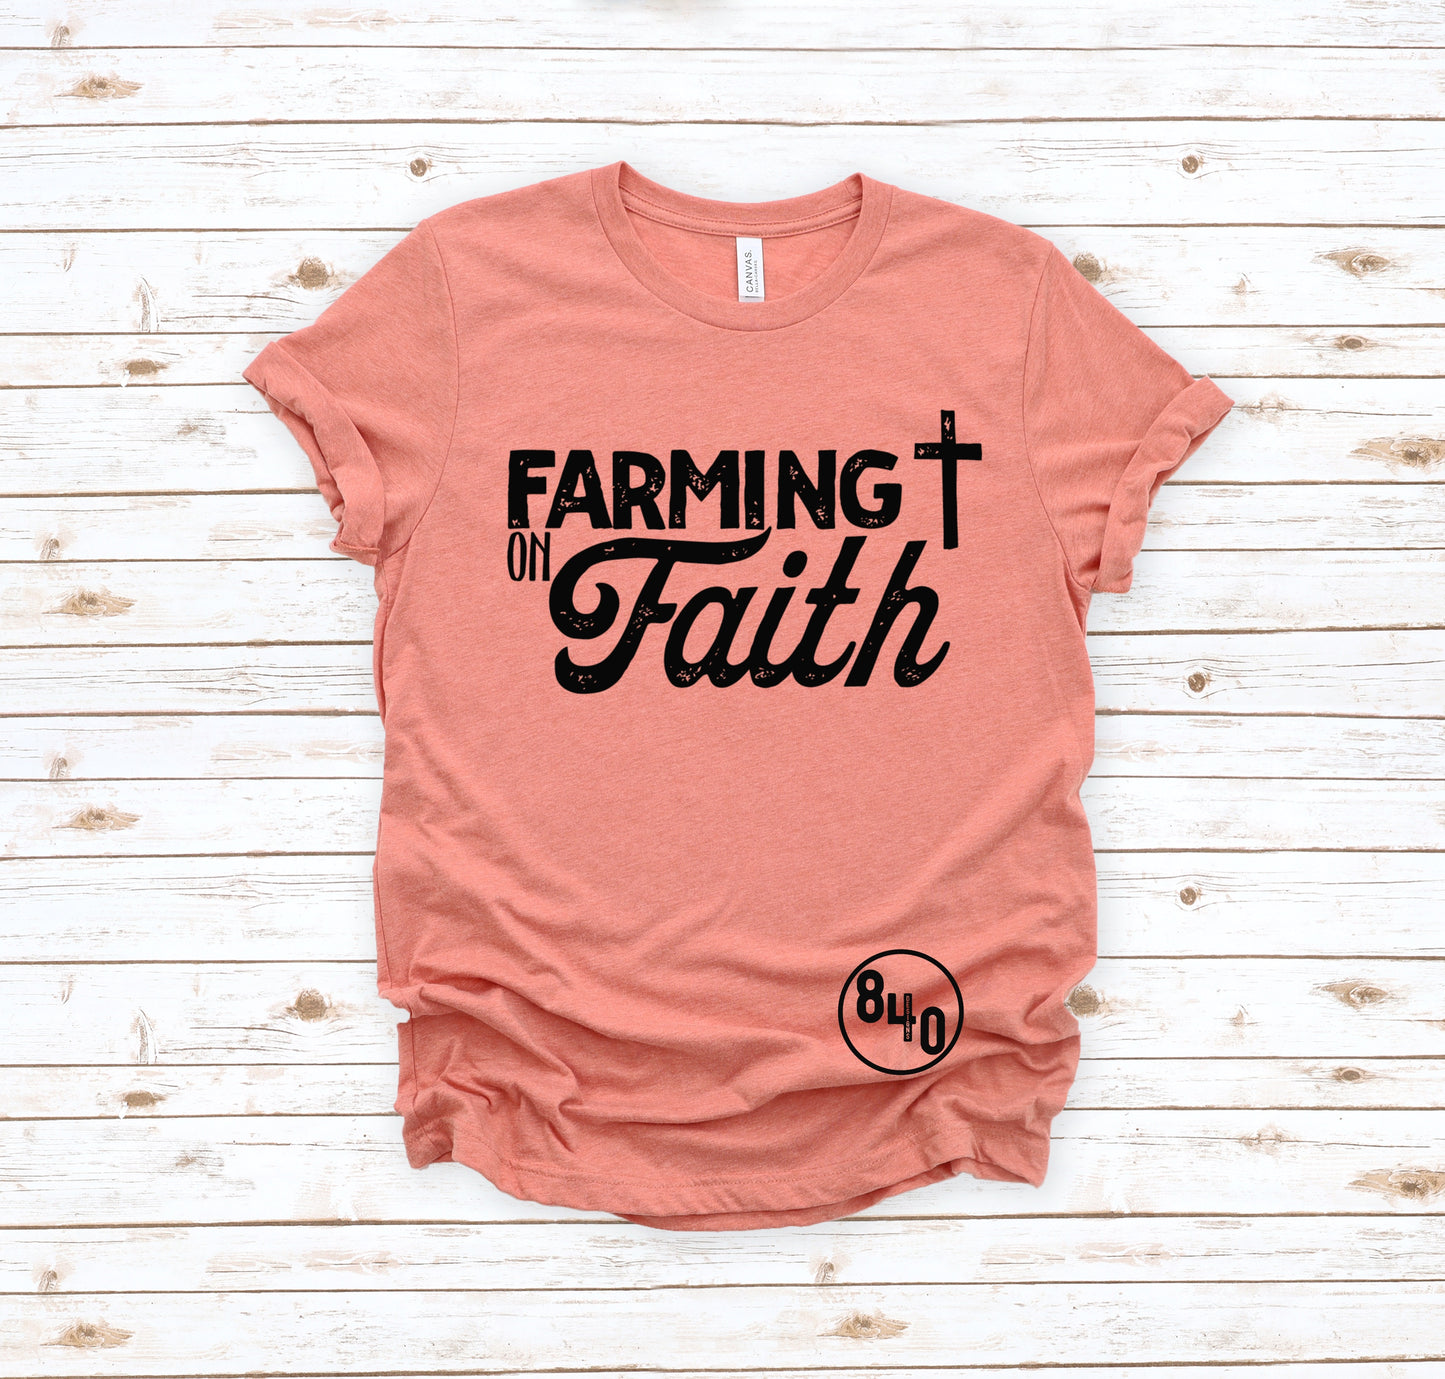 Farming on Faith - 840 Exclusive (Black Ink)